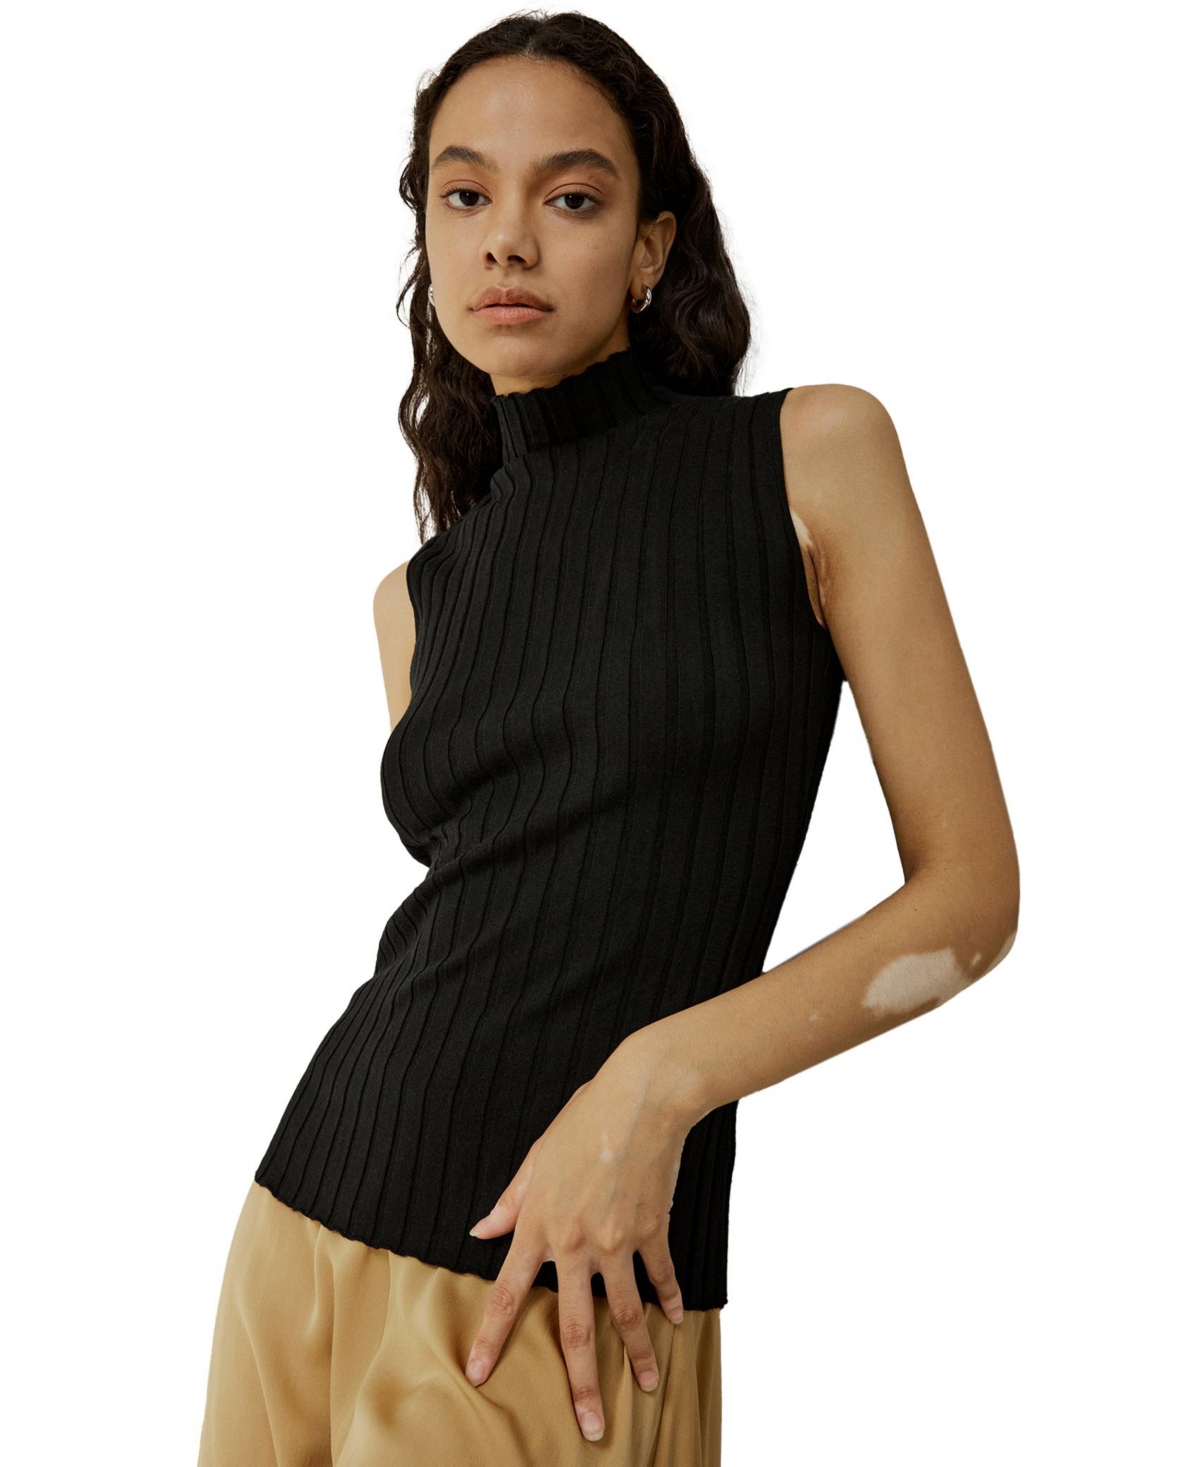 Silk-Cashmere Blend Knit Top for Women - Dark camel